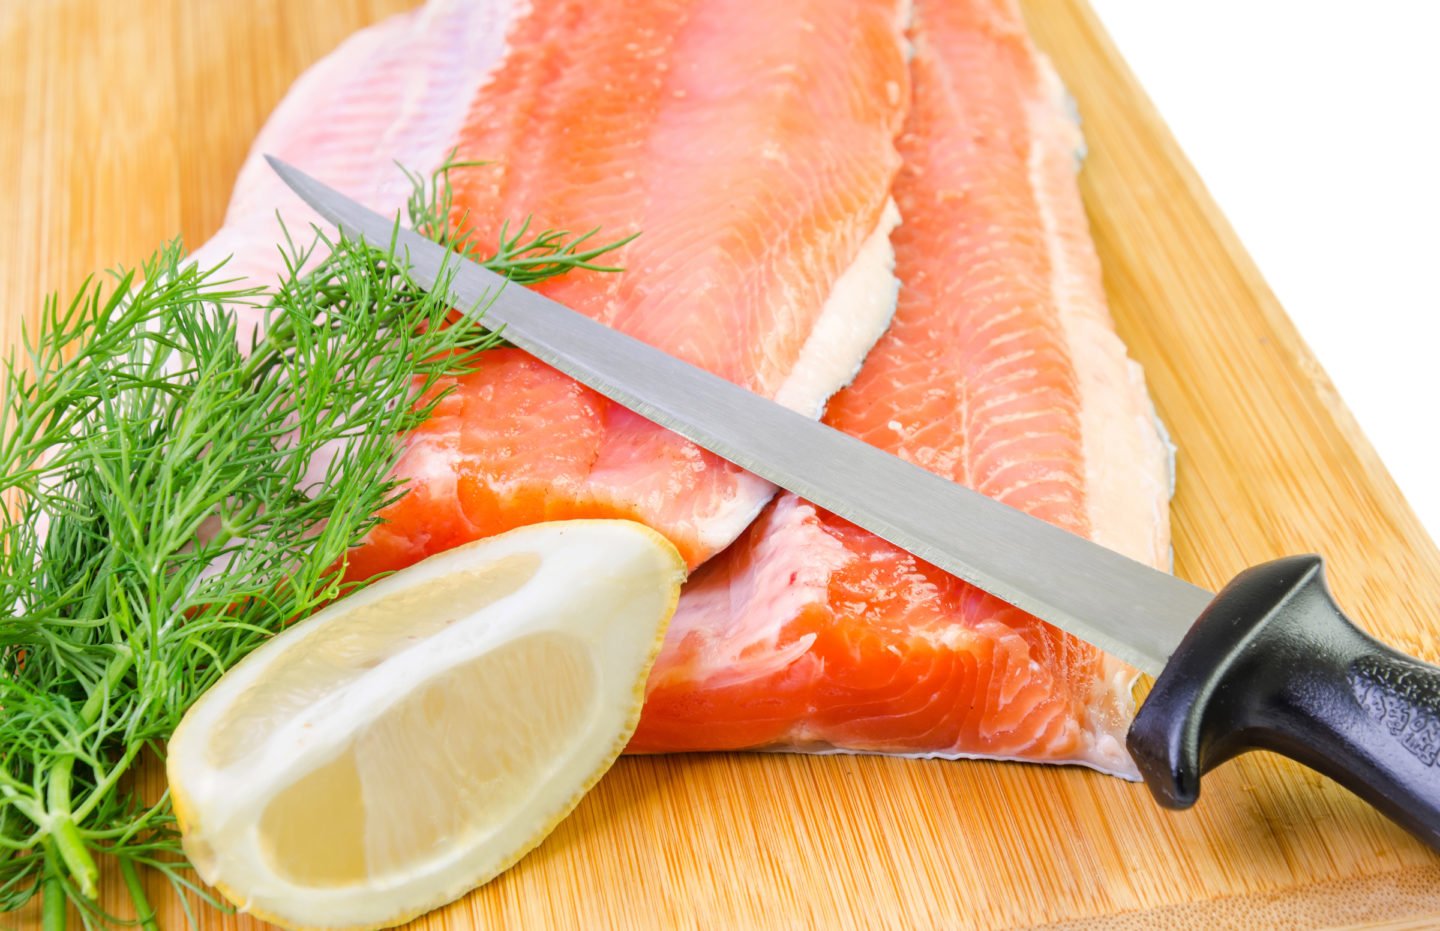 fish fillet knife on top of trout fillets